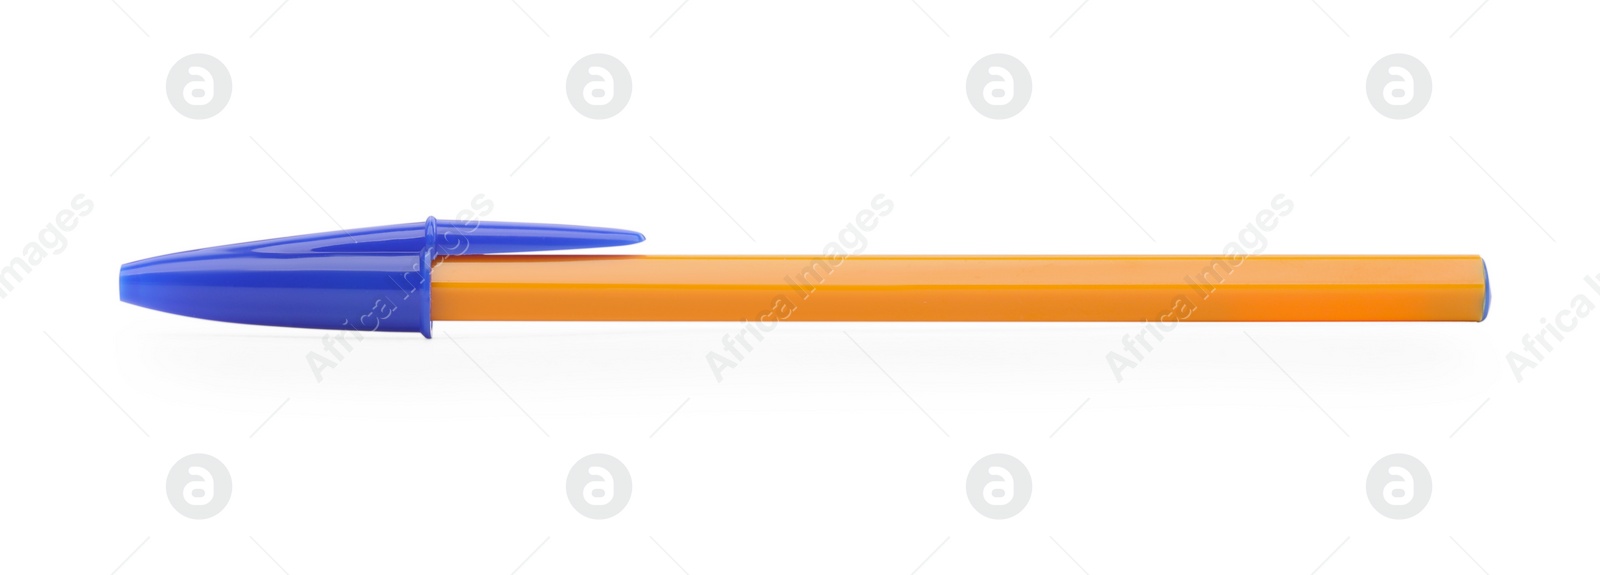 Photo of New orange plastic pen isolated on white